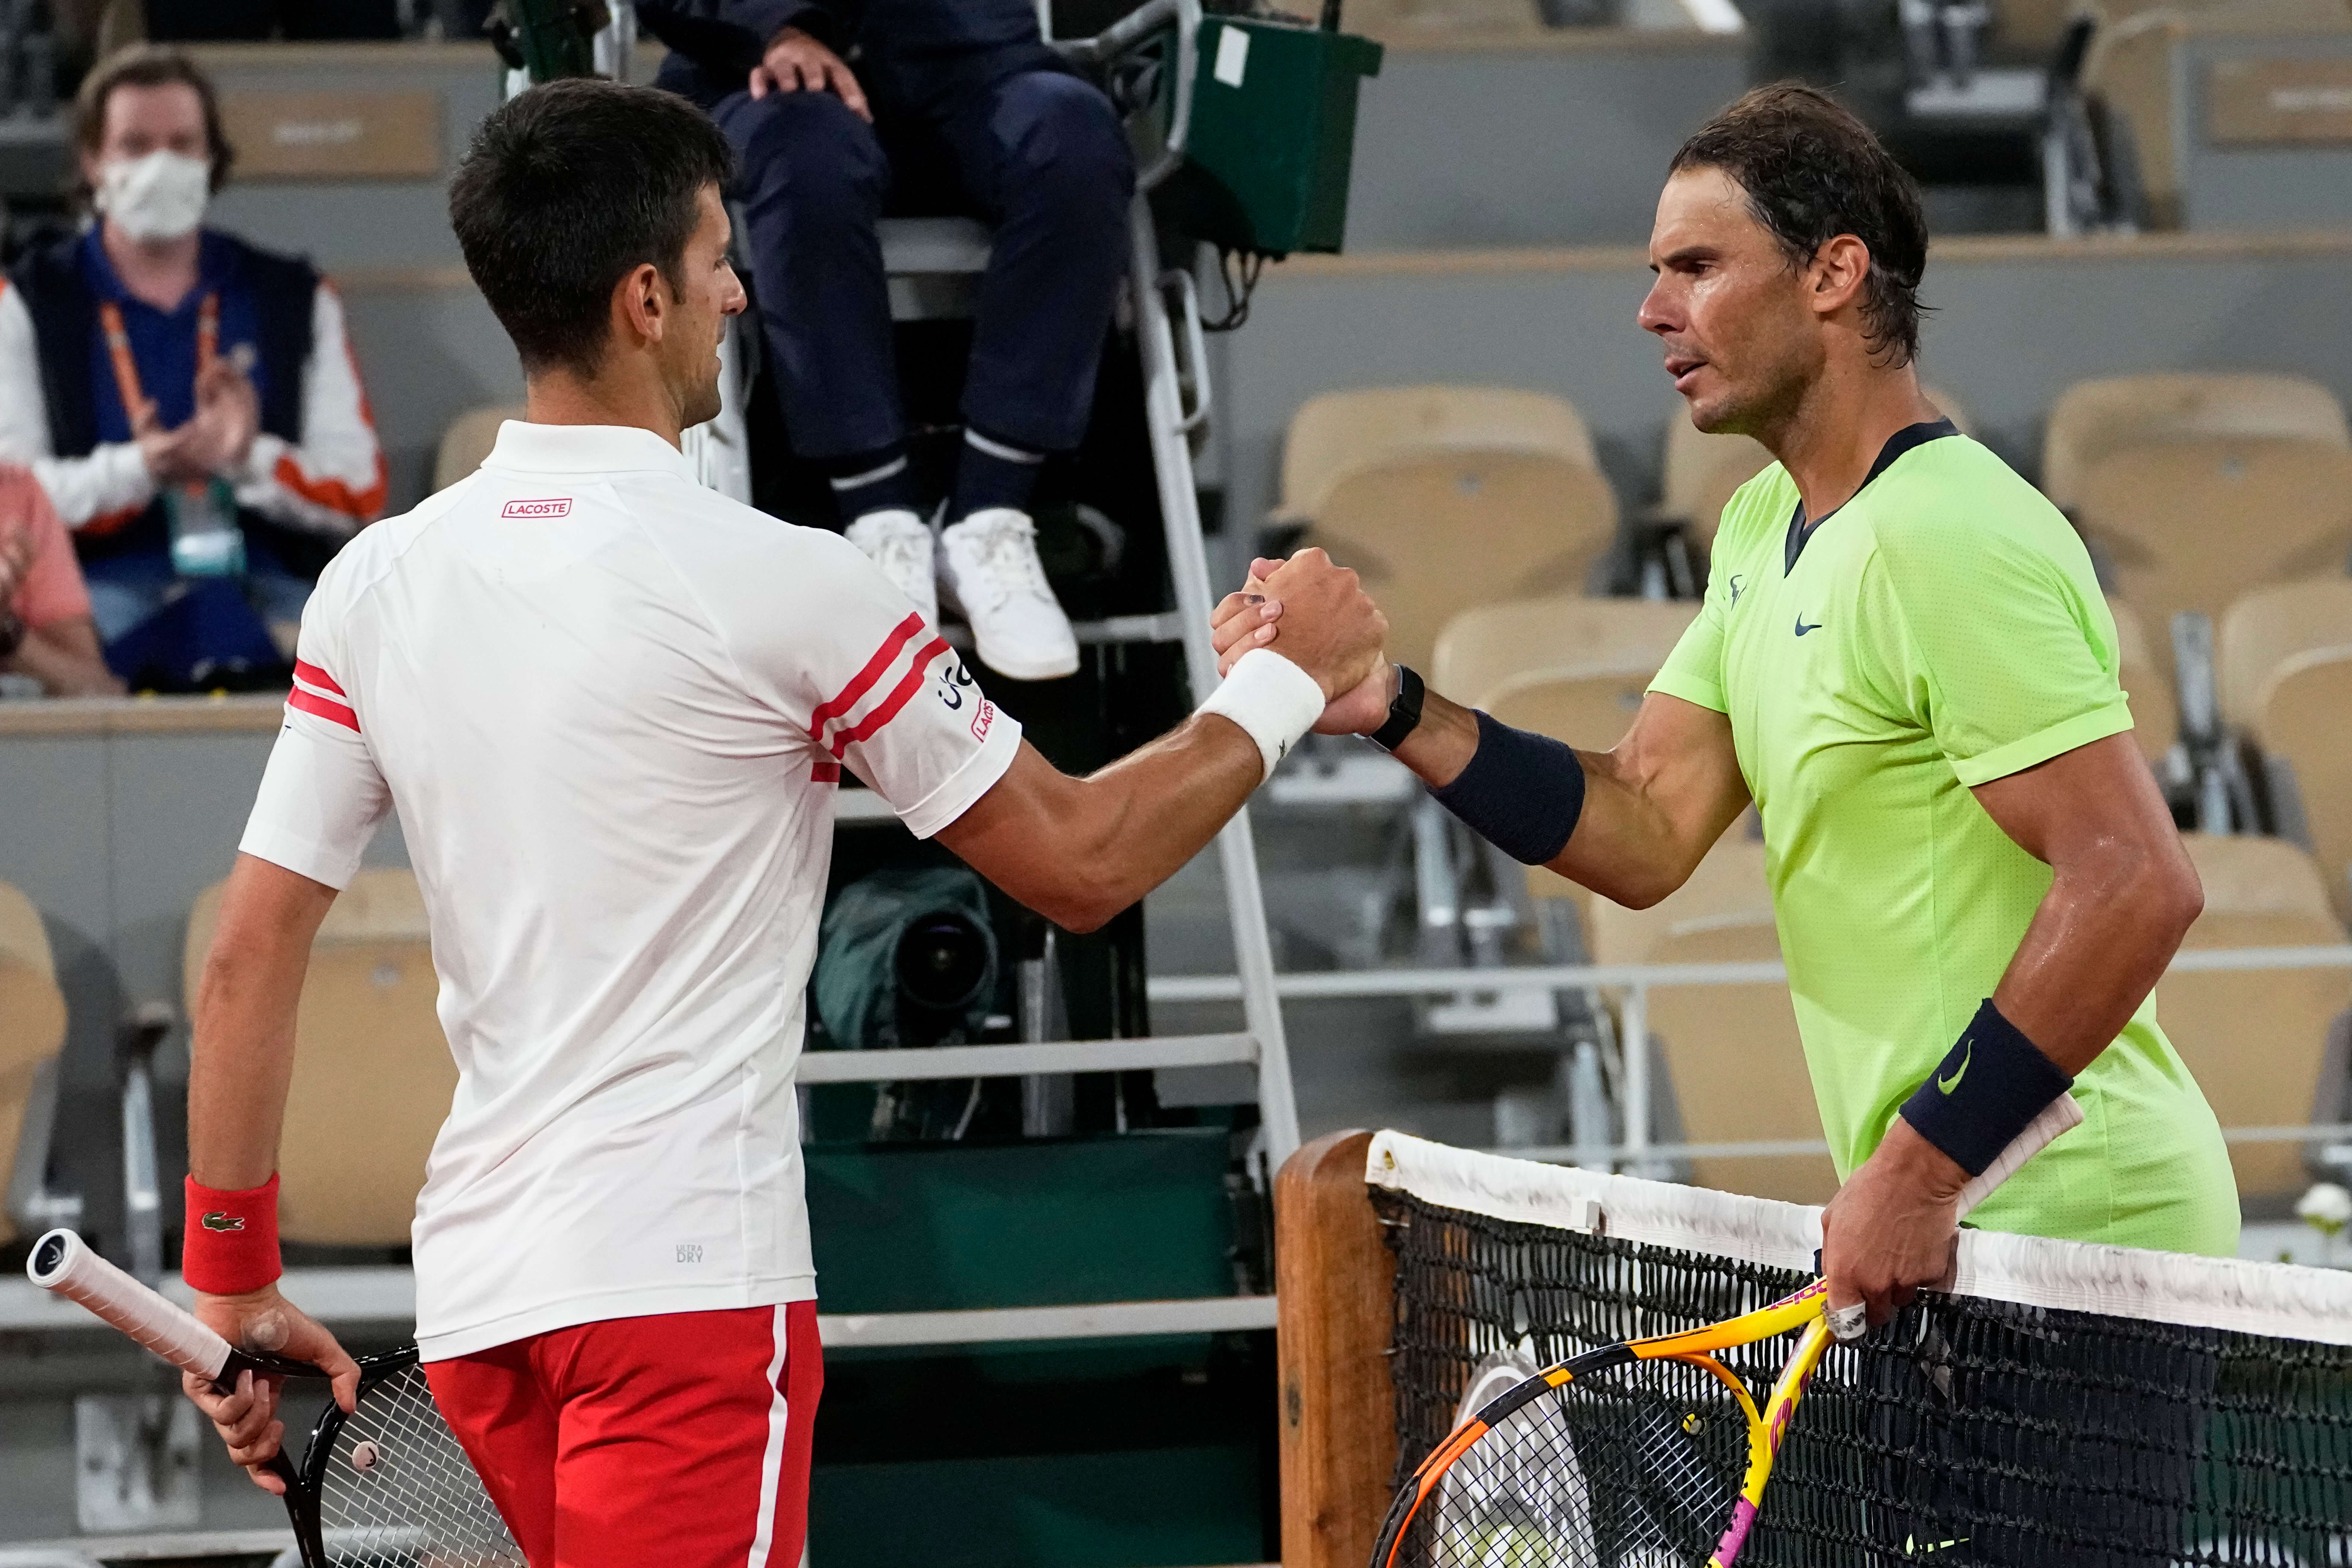 Novak Djokovic vs Rafael Nadal 2022 French Open quarterfinals odds, schedule, how to watch amNewYork